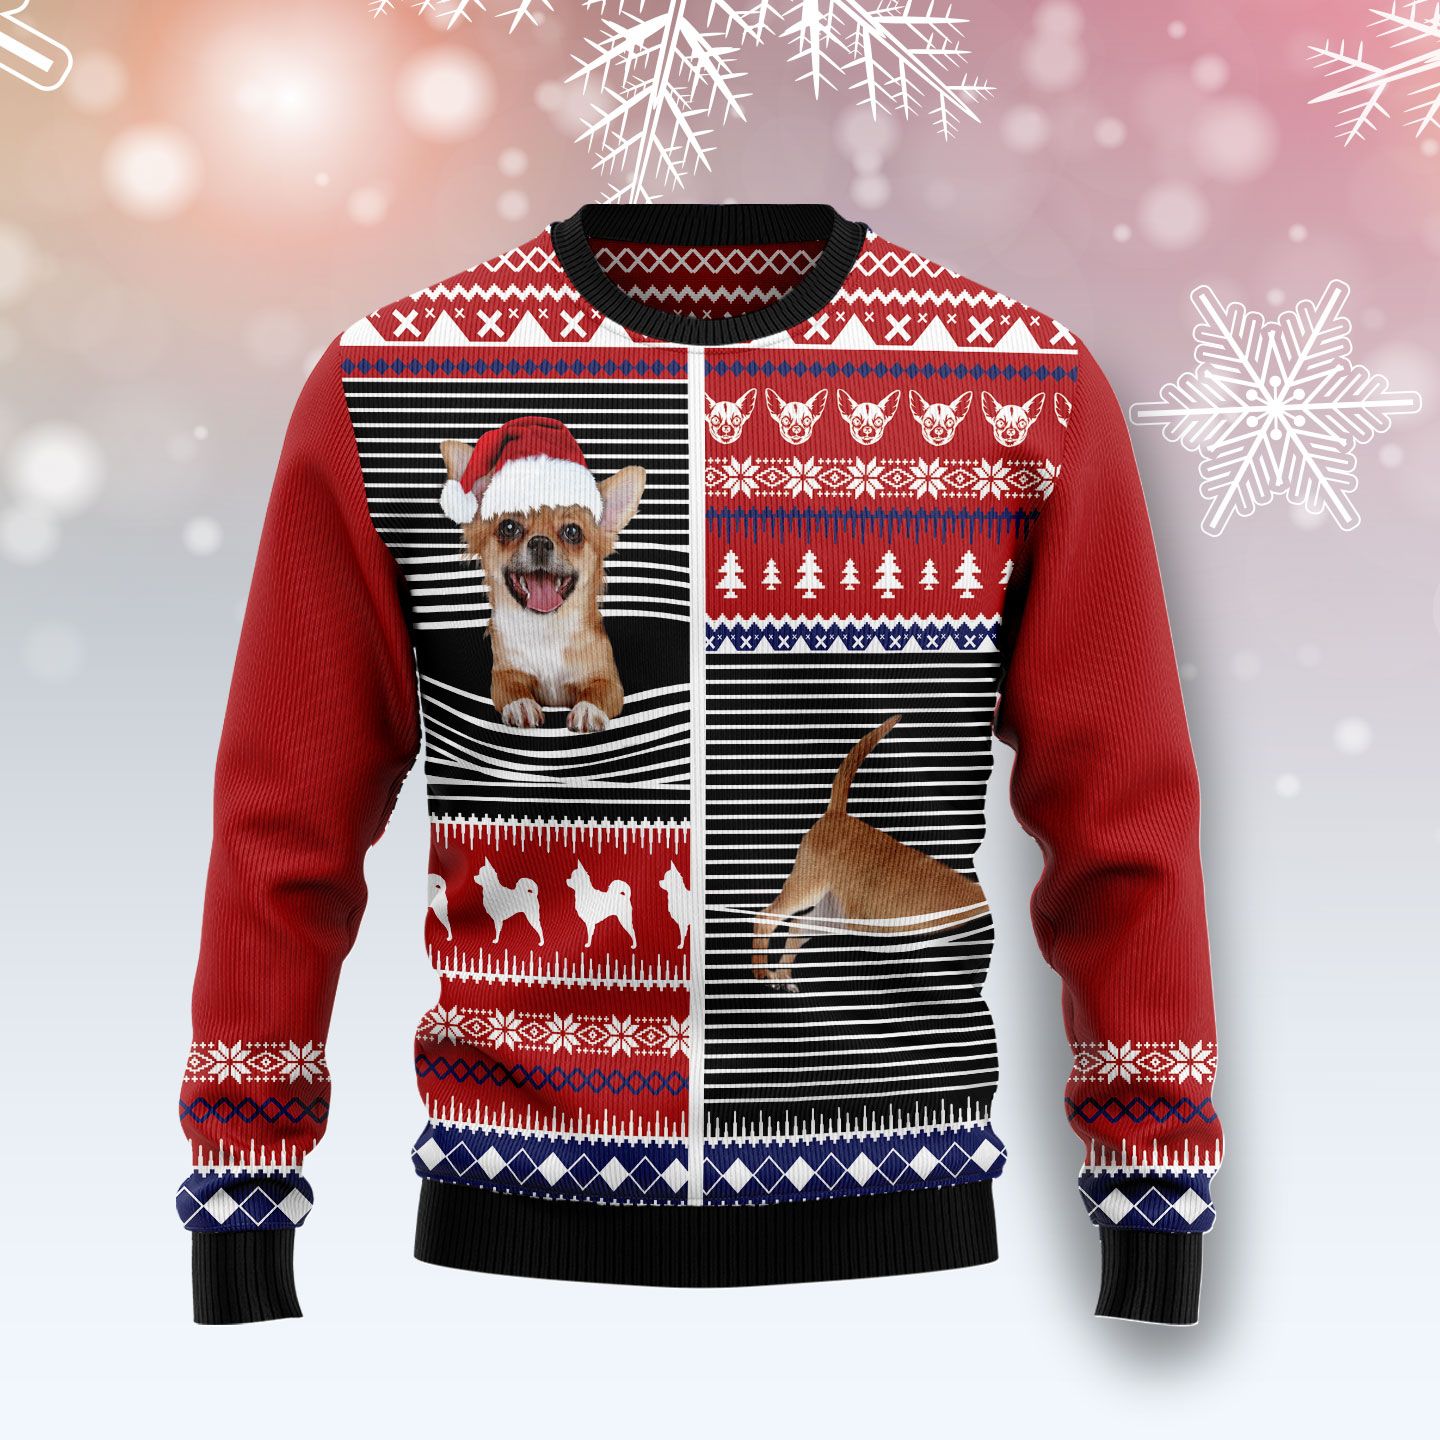 Lovely Cow Christmas Wool Sweater - RobinPlaceFabrics